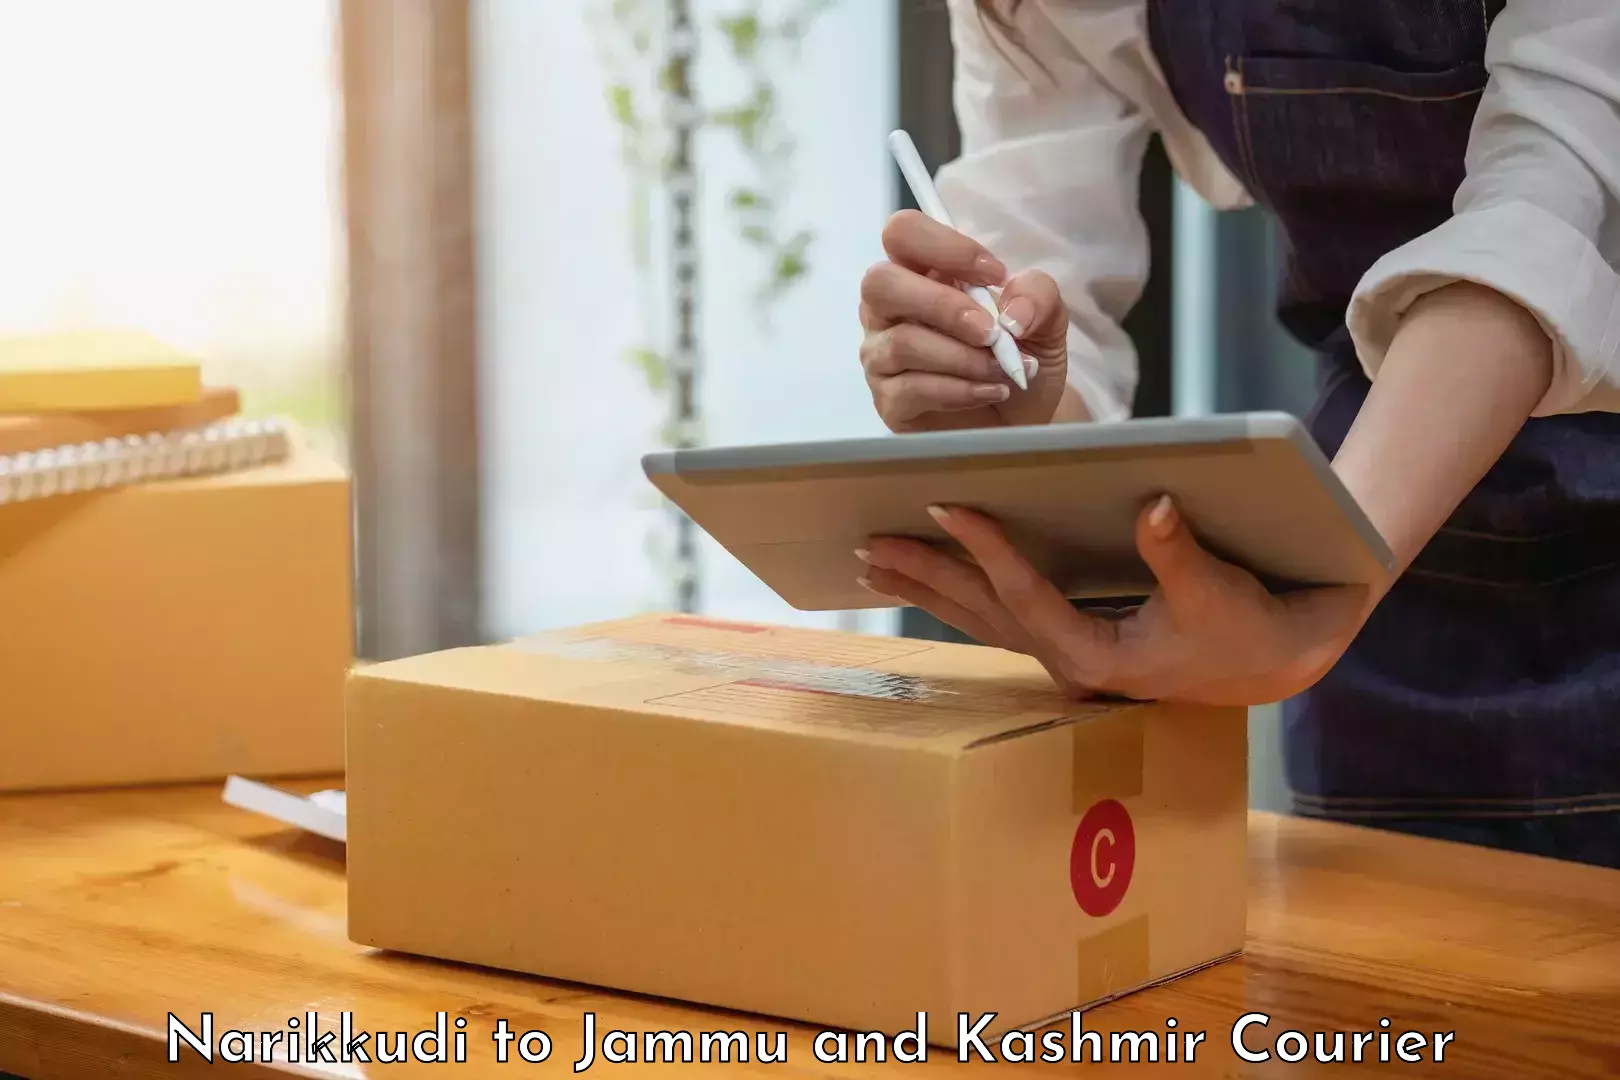 Round-the-clock parcel delivery Narikkudi to University of Jammu